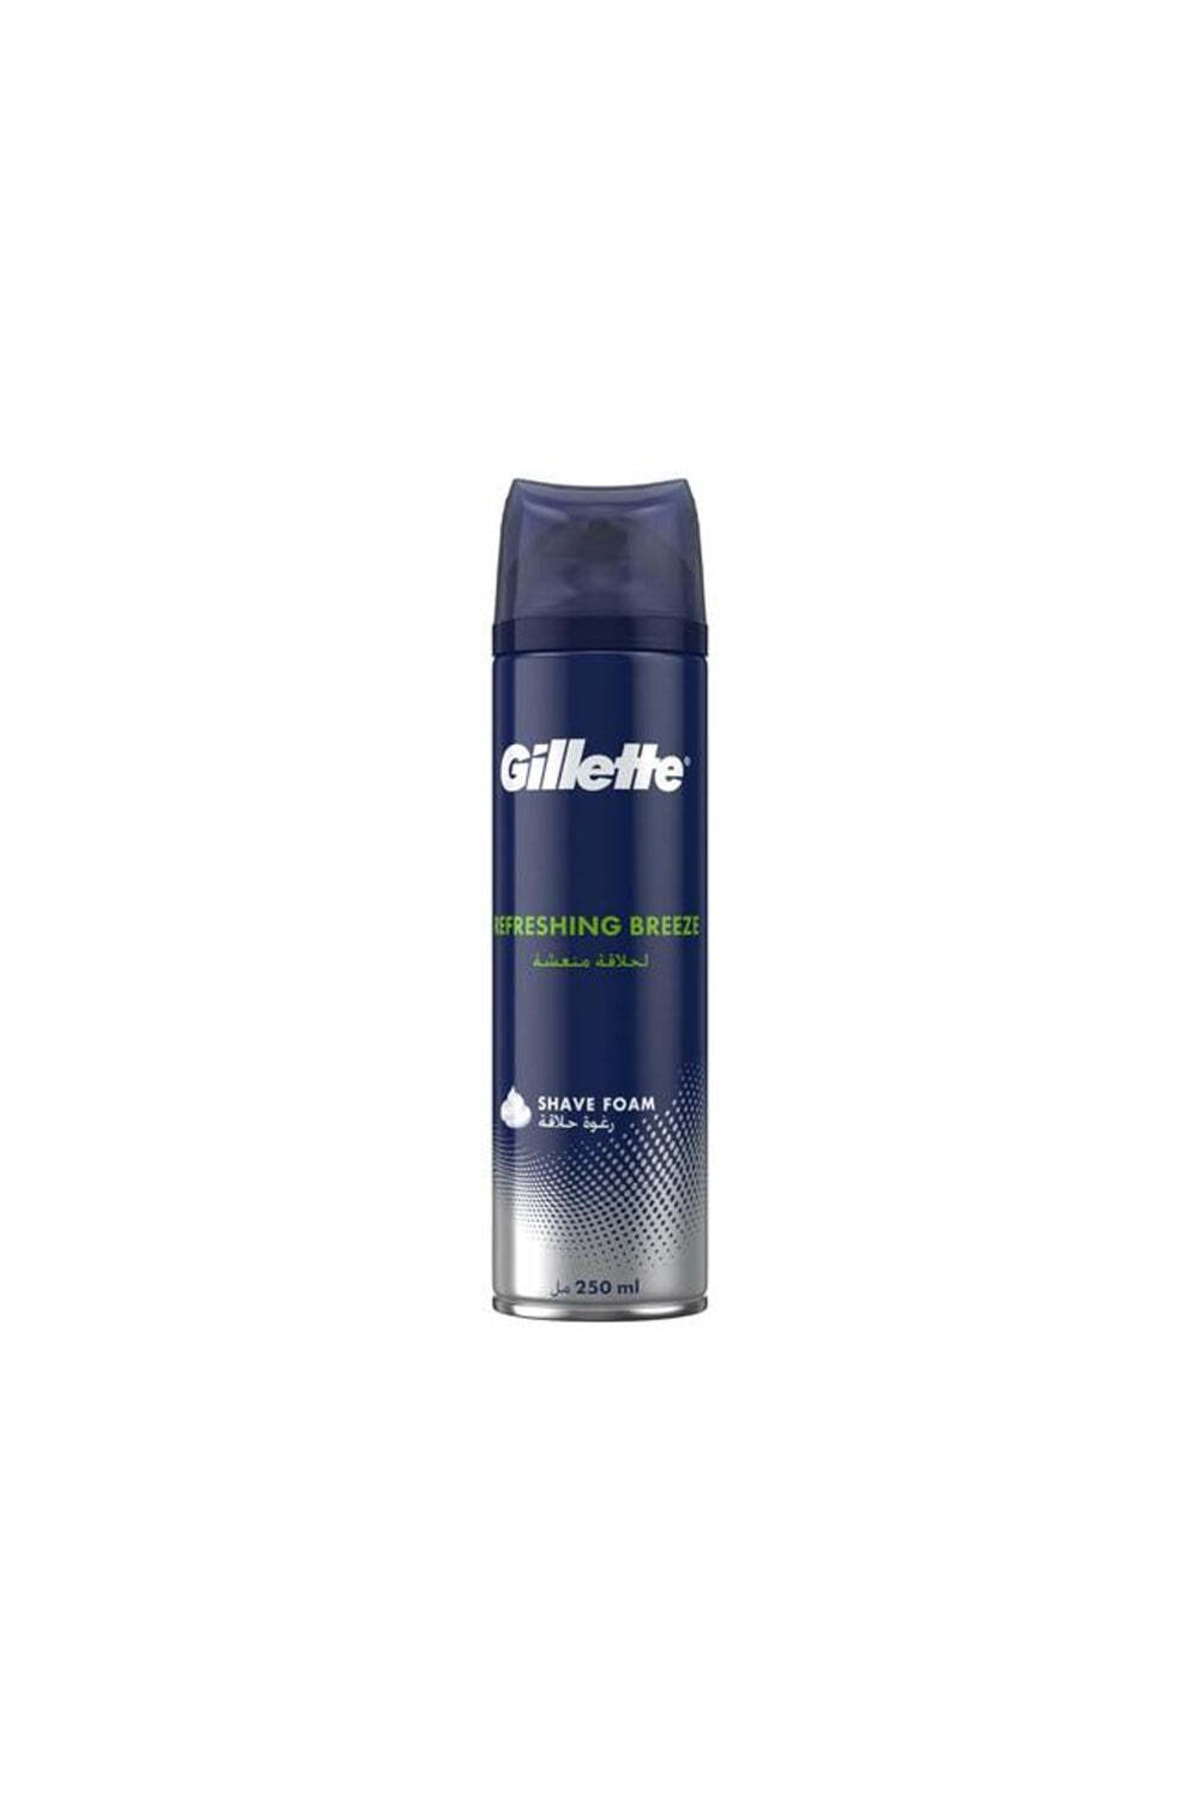 Gillette Refreshing Breeze Shave Foam 250ml